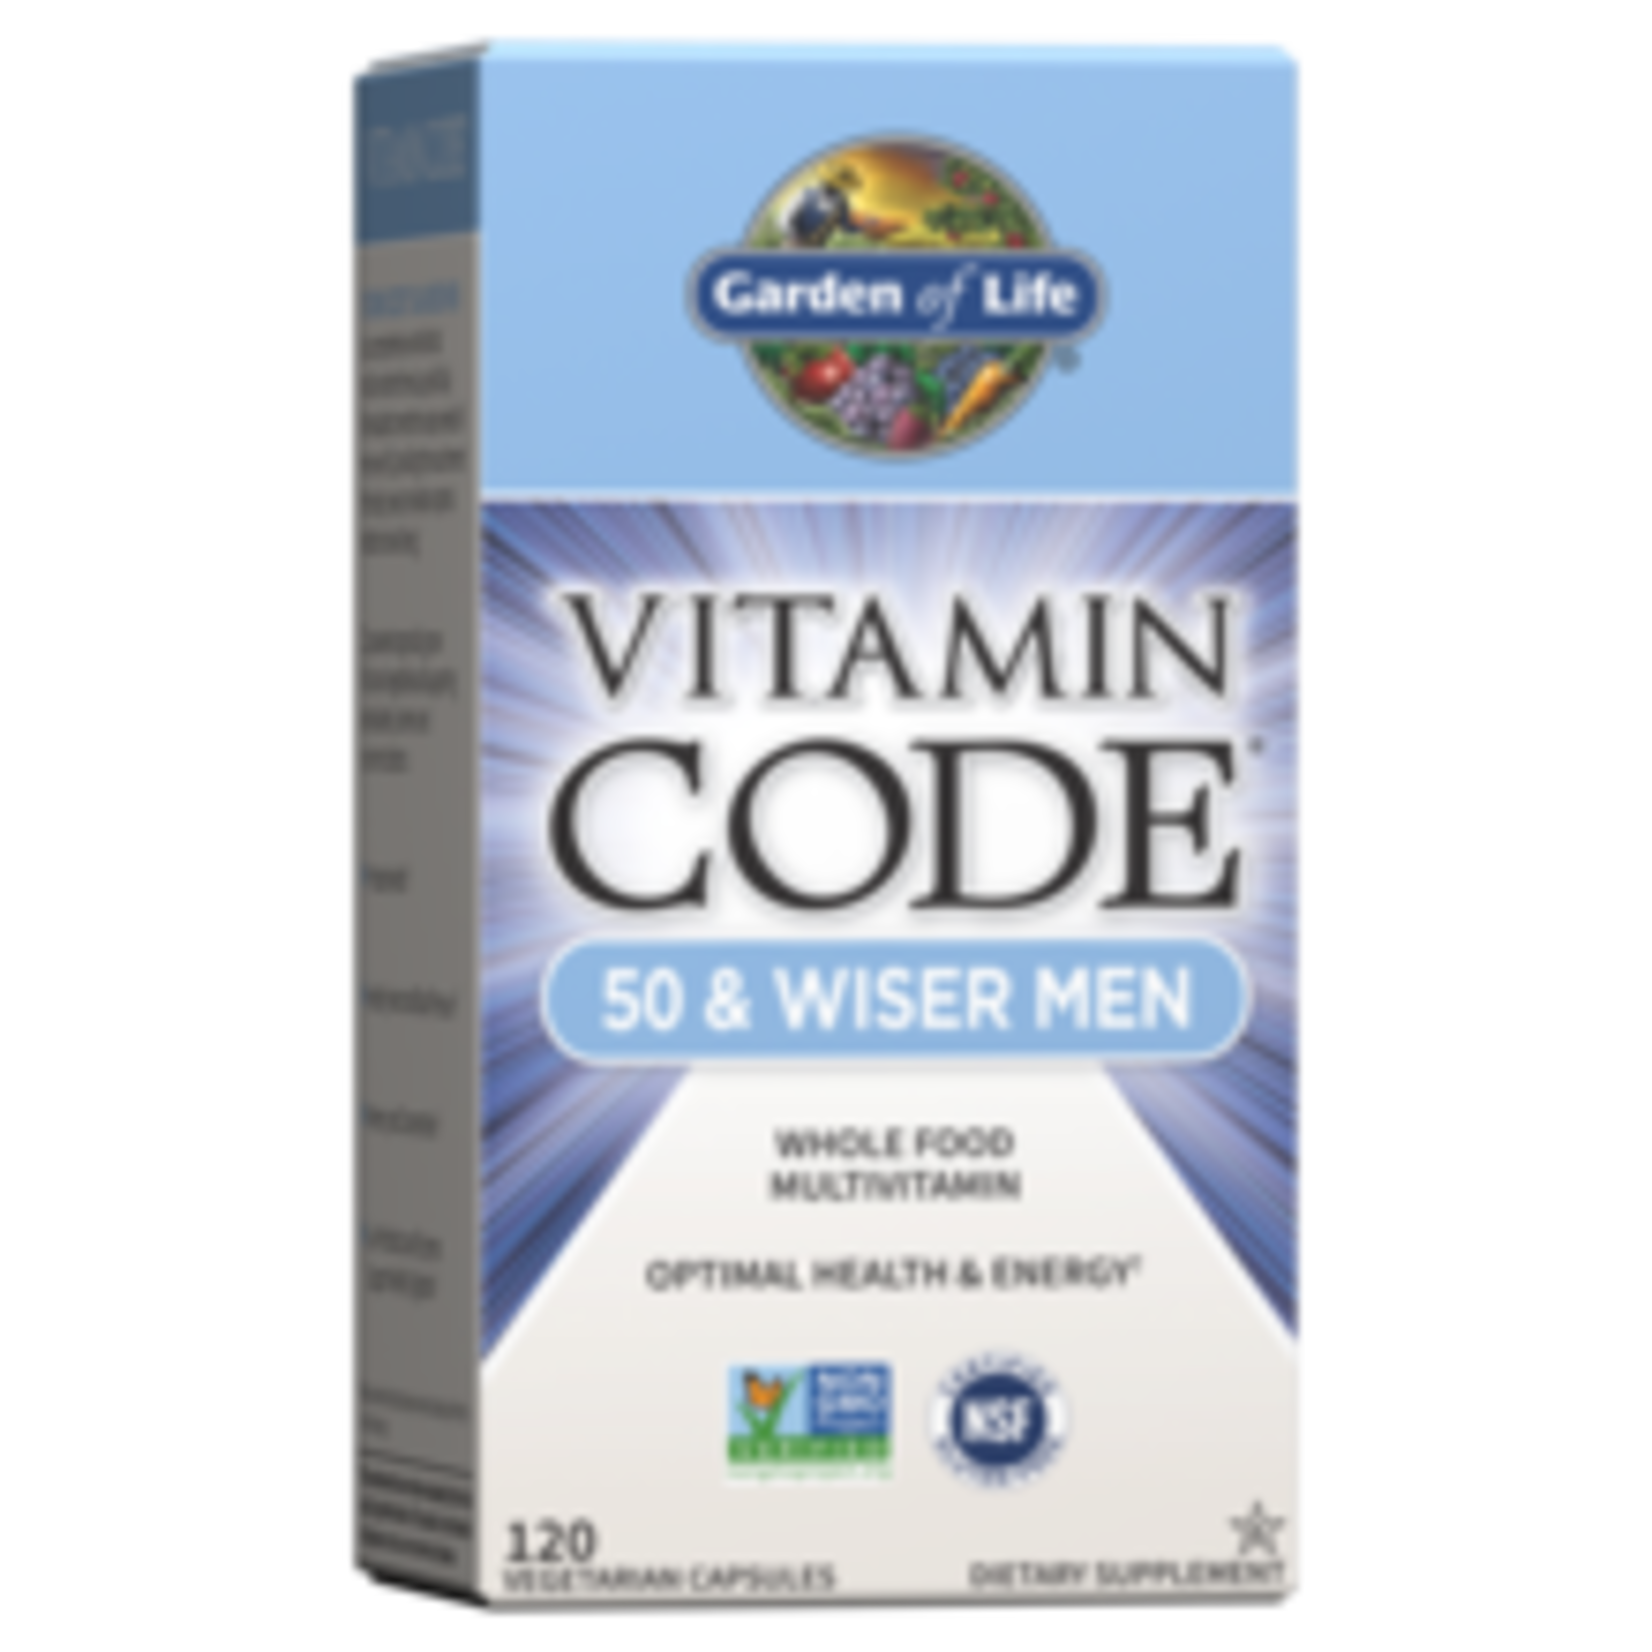 Garden of Life Garden of Life - Vitamin Code 50 & Wiser Men Multivitamin